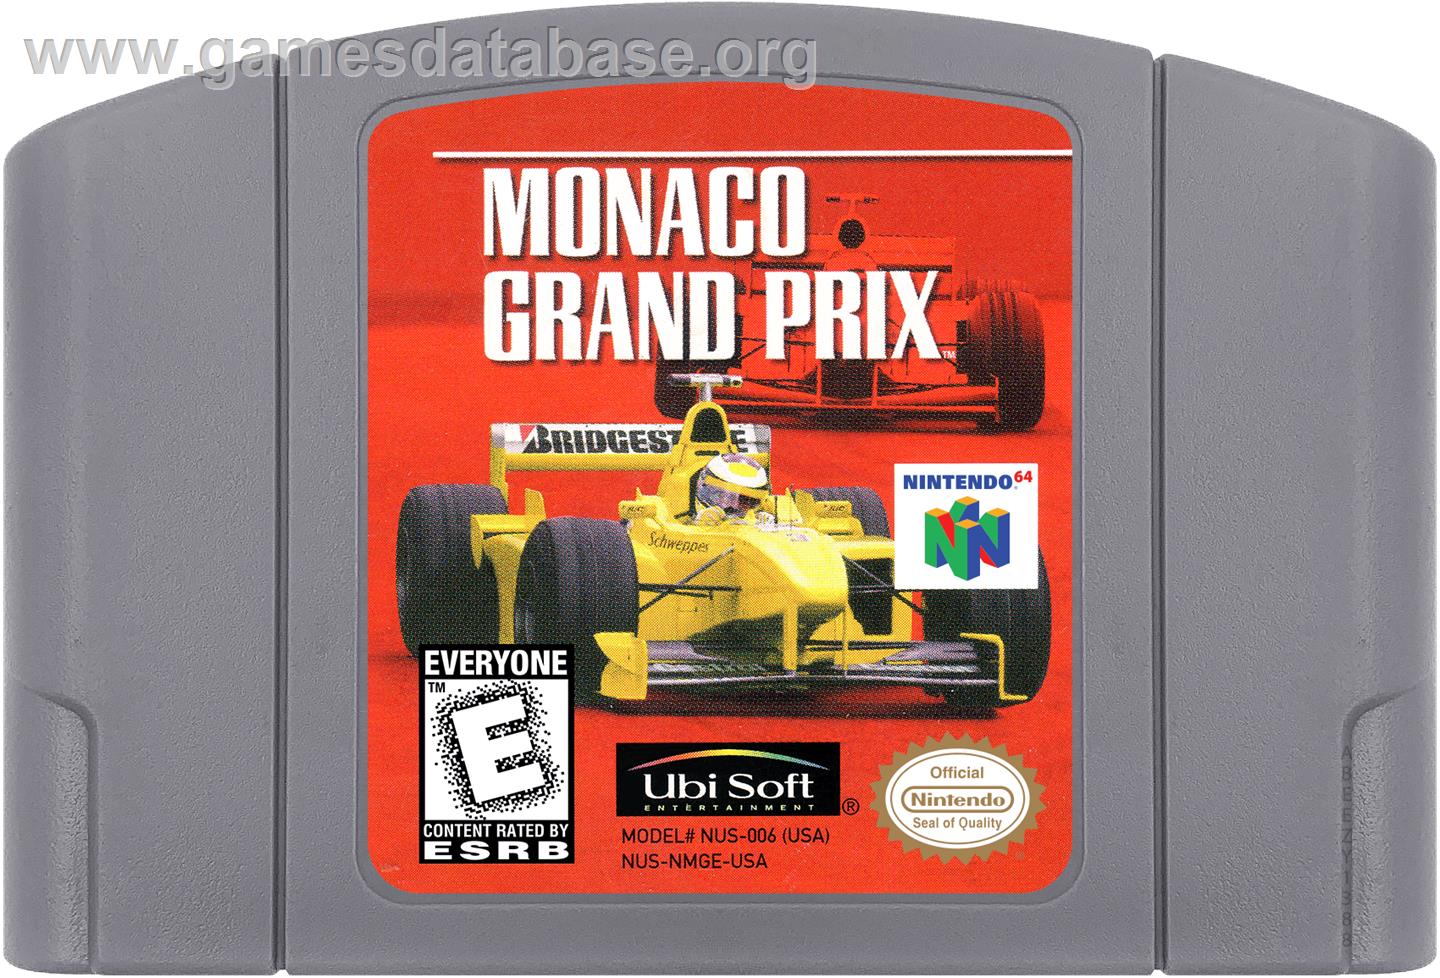 Monaco Grand Prix - Nintendo N64 - Artwork - Cartridge